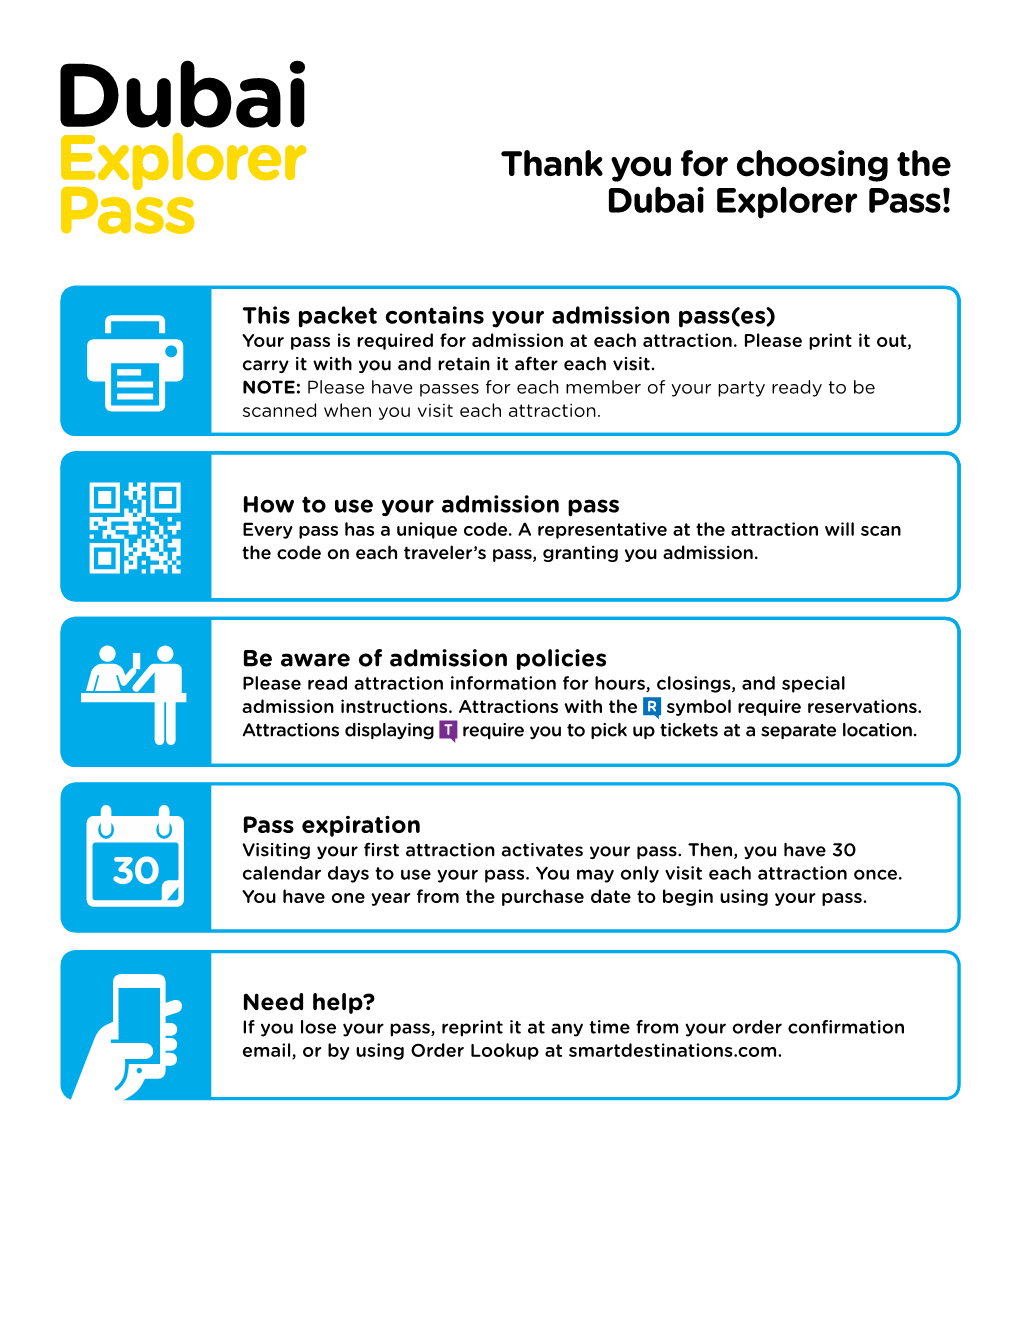 Thank You for Choosing the Dubai Explorer Pass!